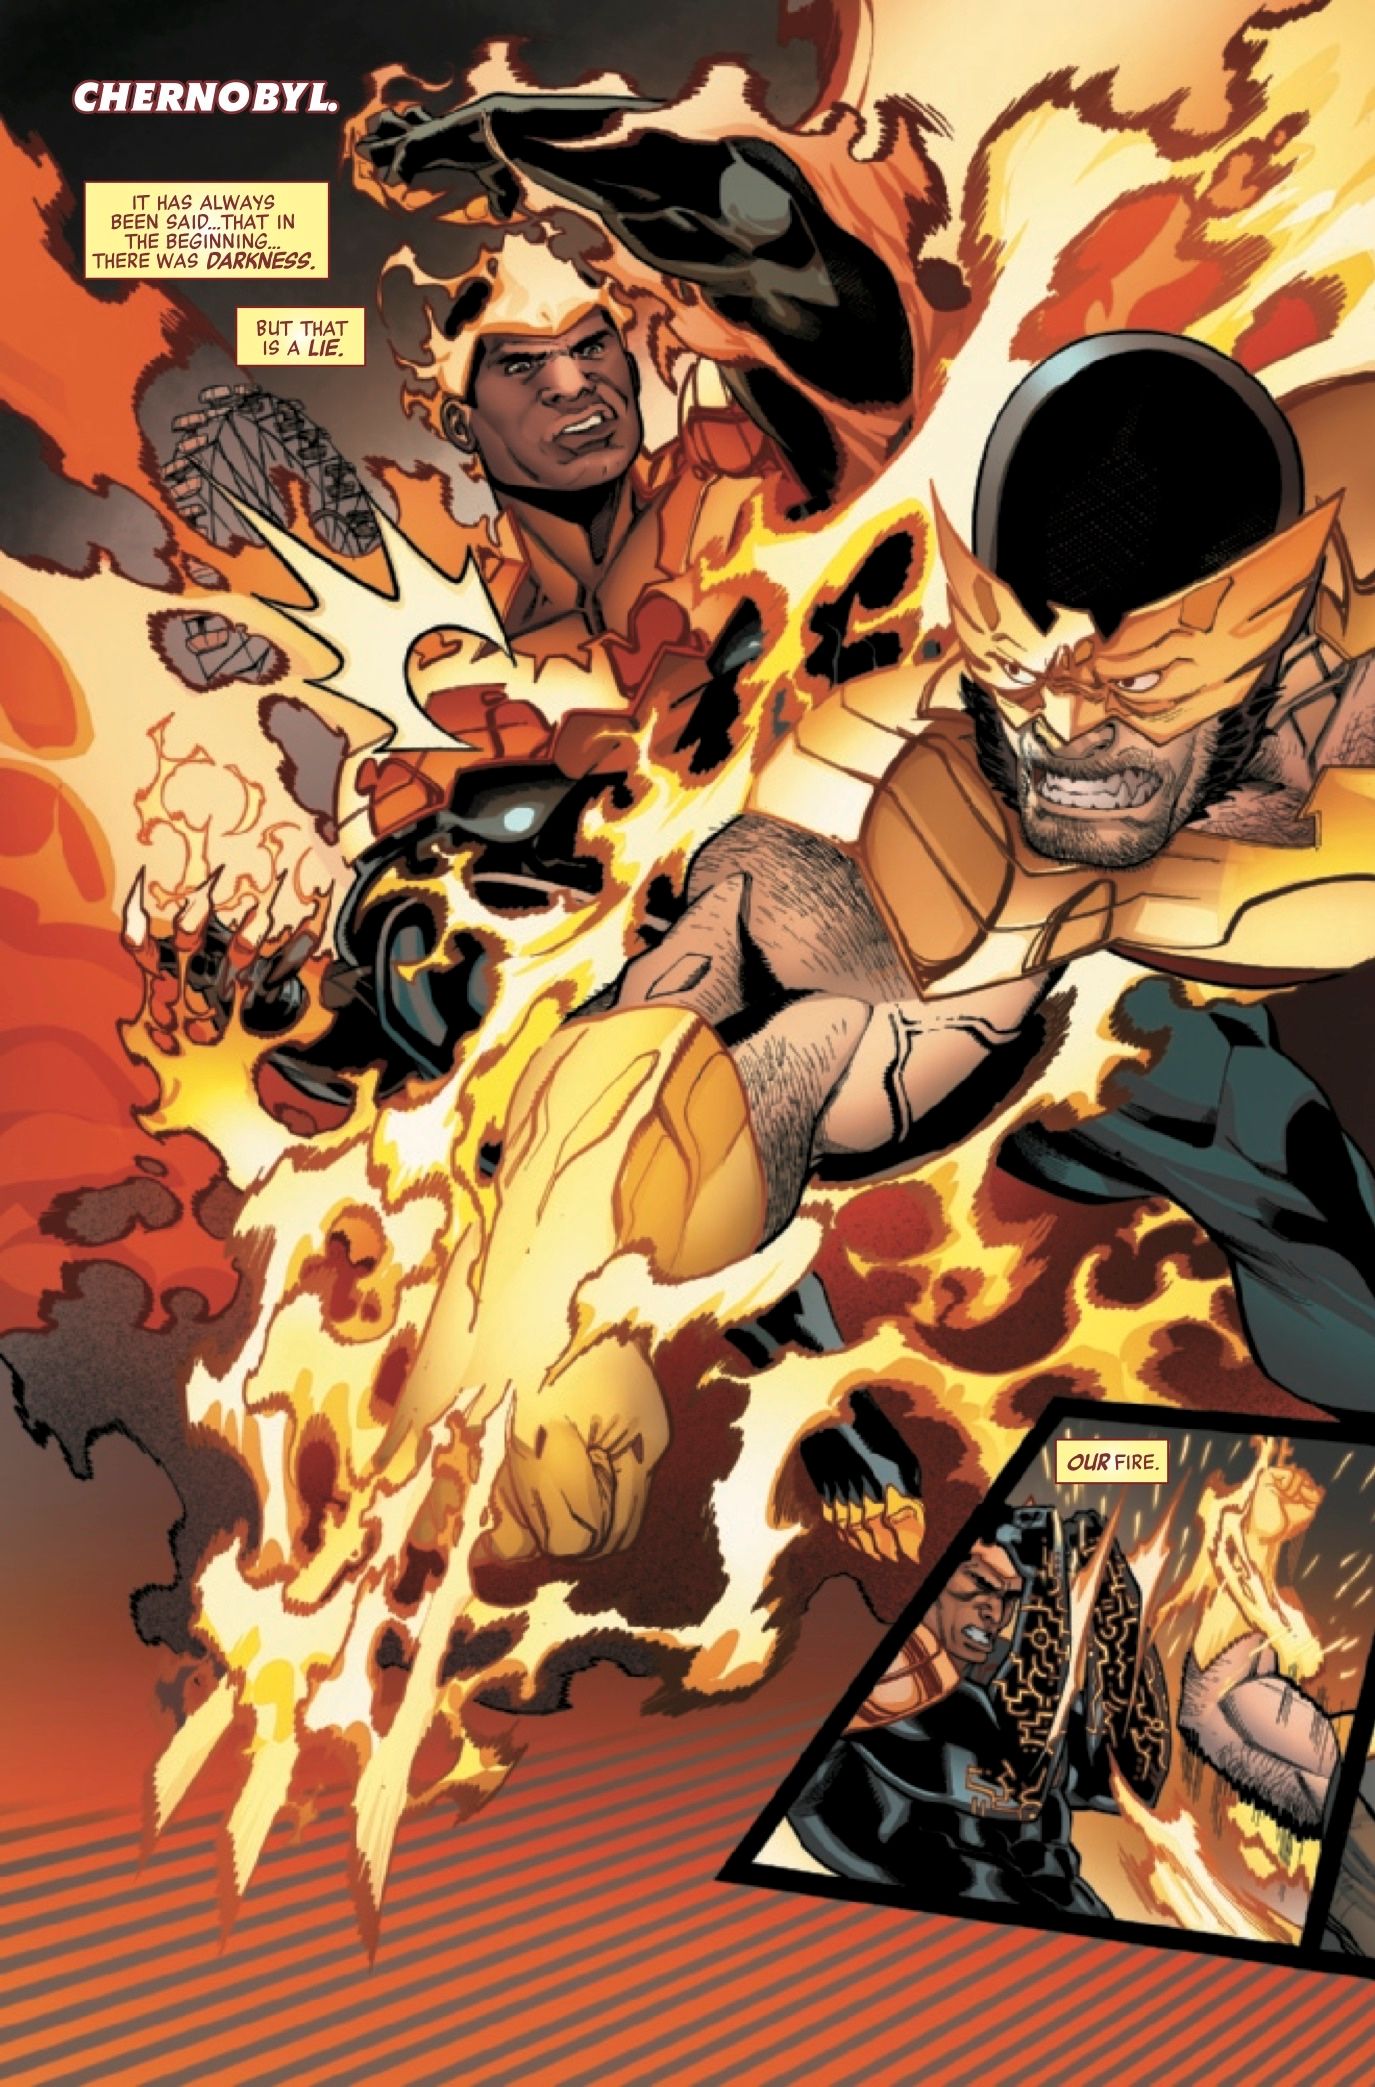 Marvel Settles The Wolverine vs Black Panther Debate